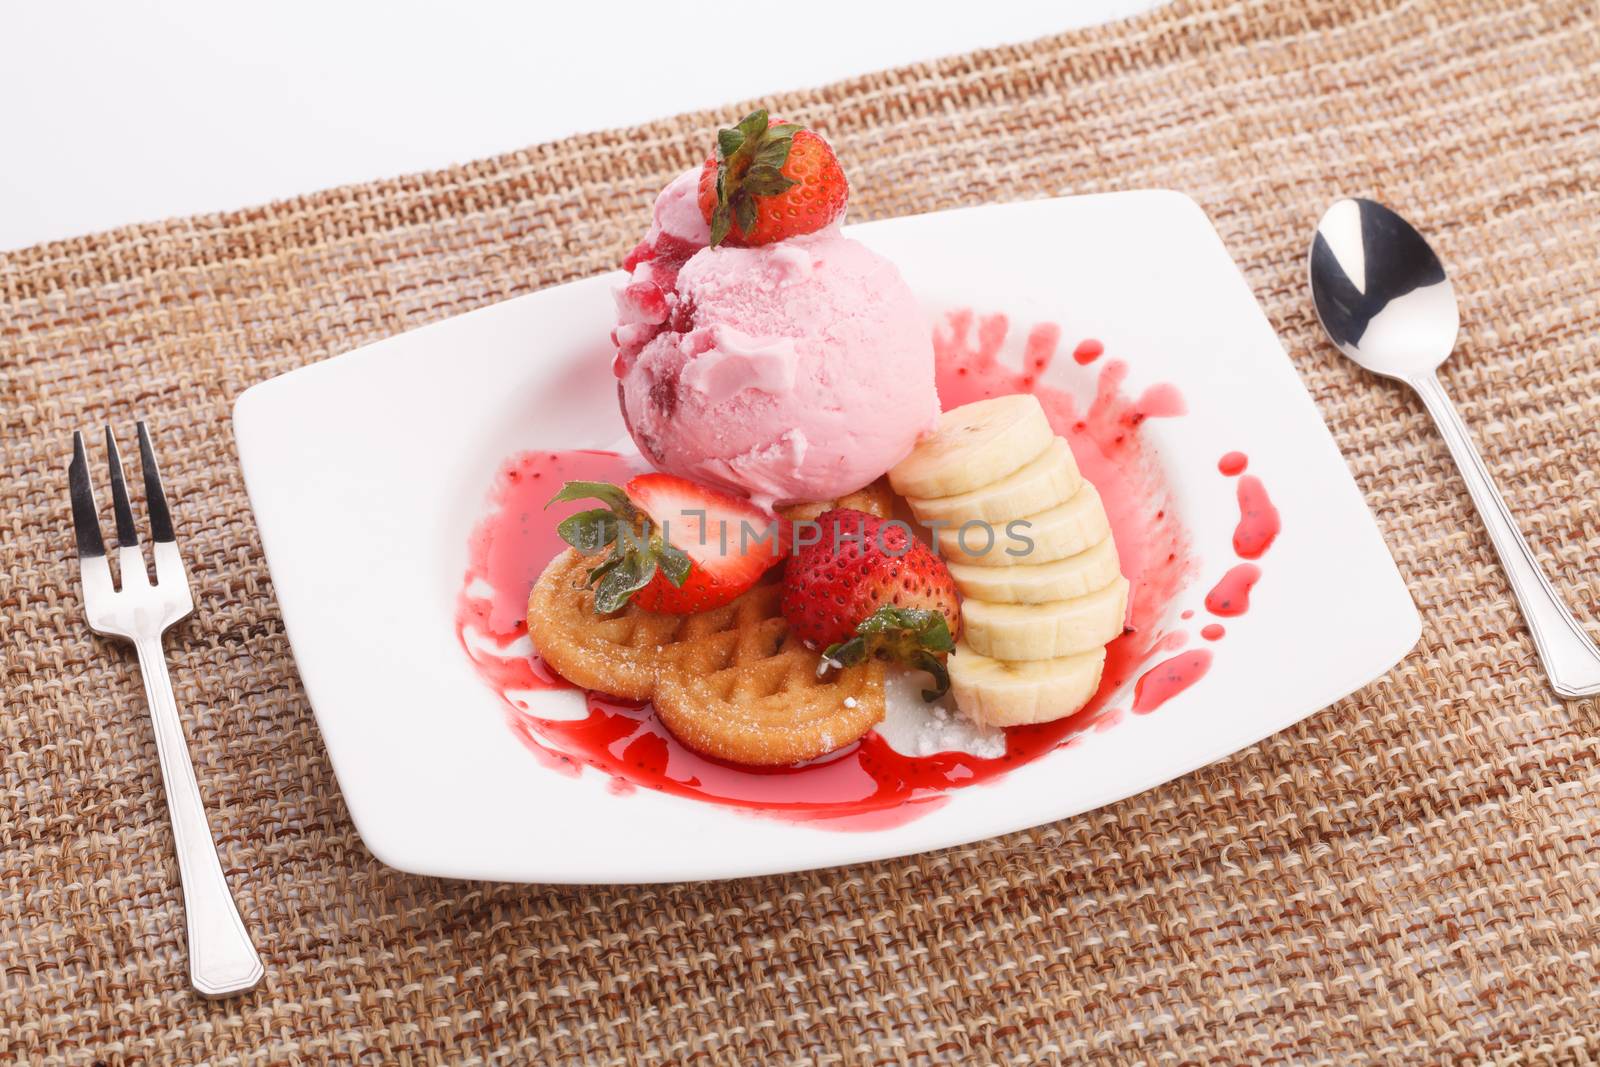 vaniila waffle with strawberry ice cream and banana